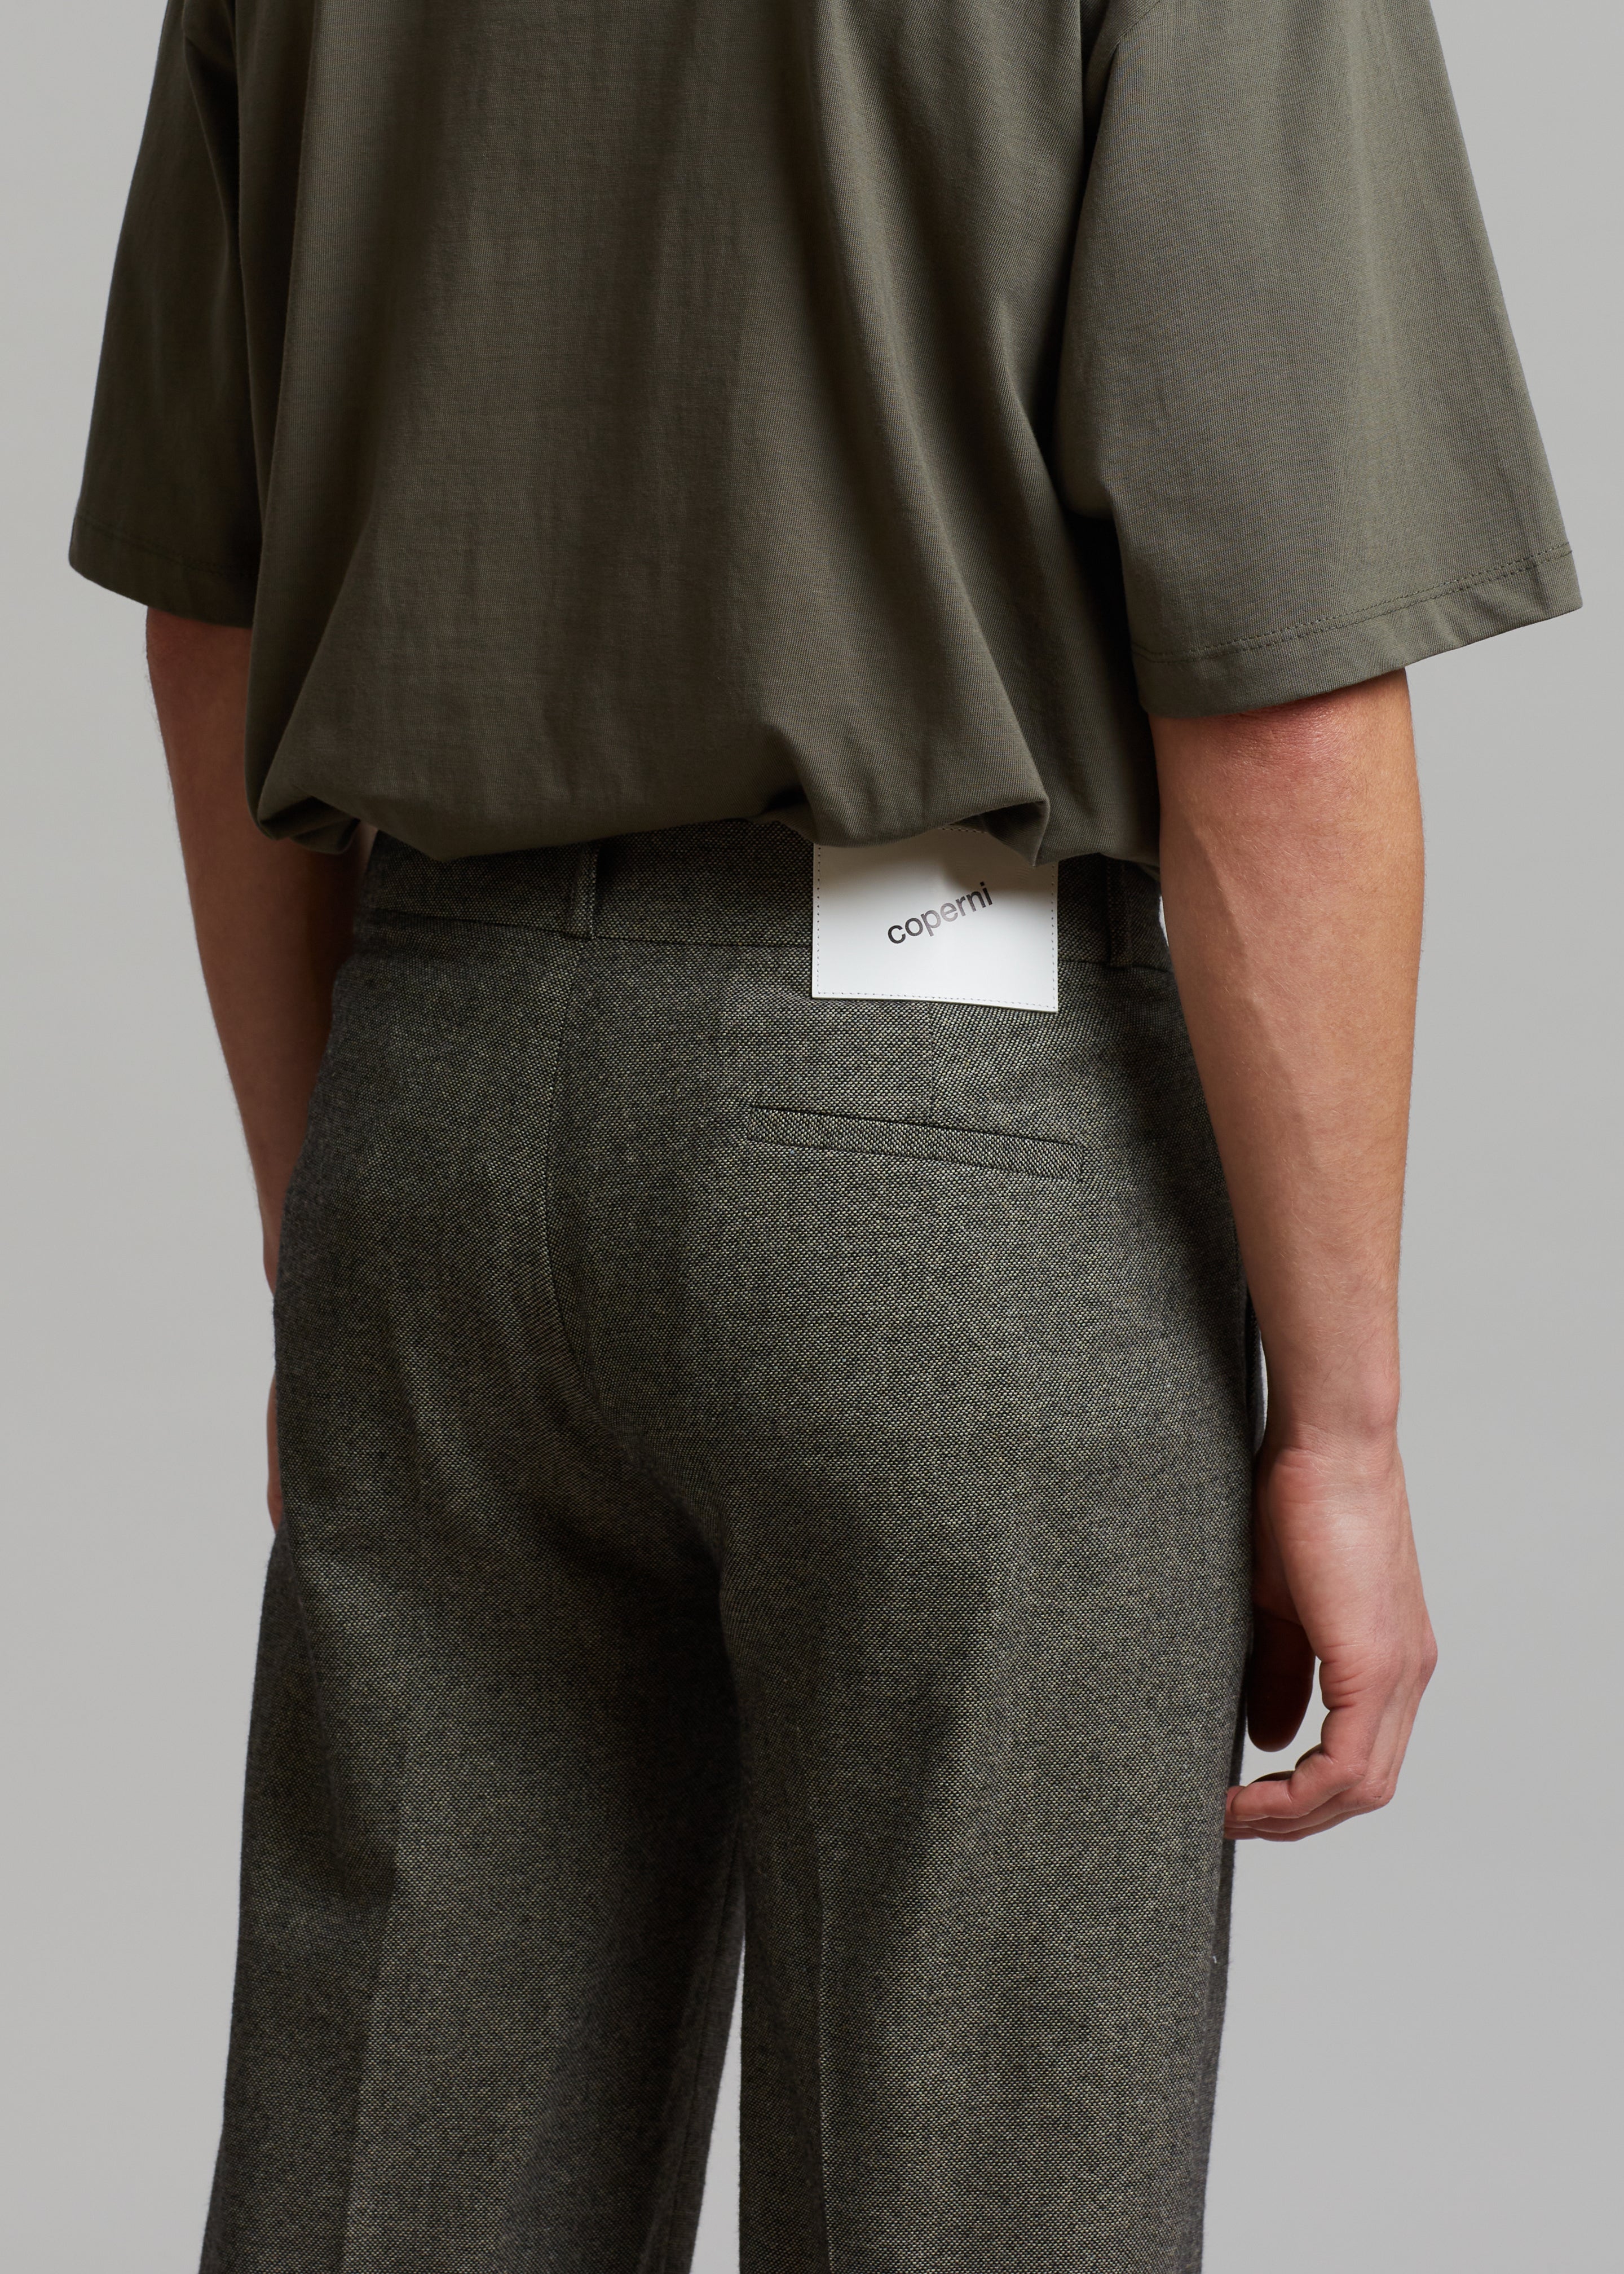 Coperni Low-rise Loose Tailored Trousers - Dark Moss - 6